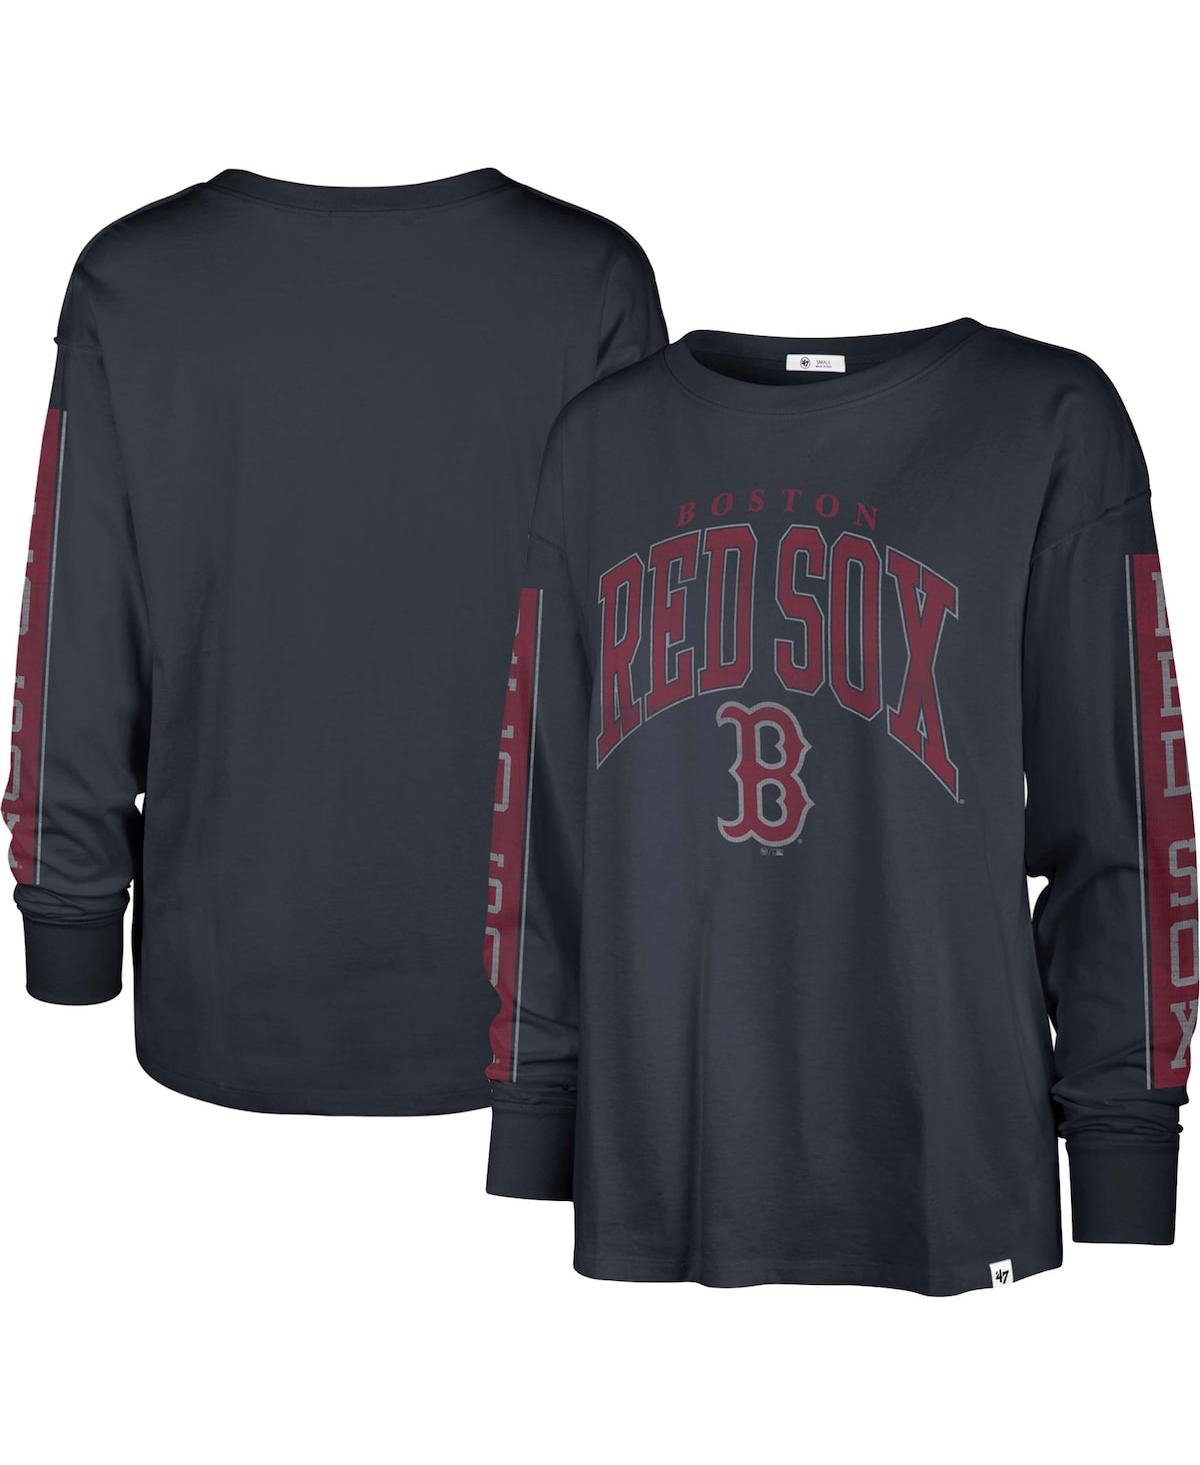 47 Brand Women's ' Navy Boston Red Sox Statement Long Sleeve T-shirt